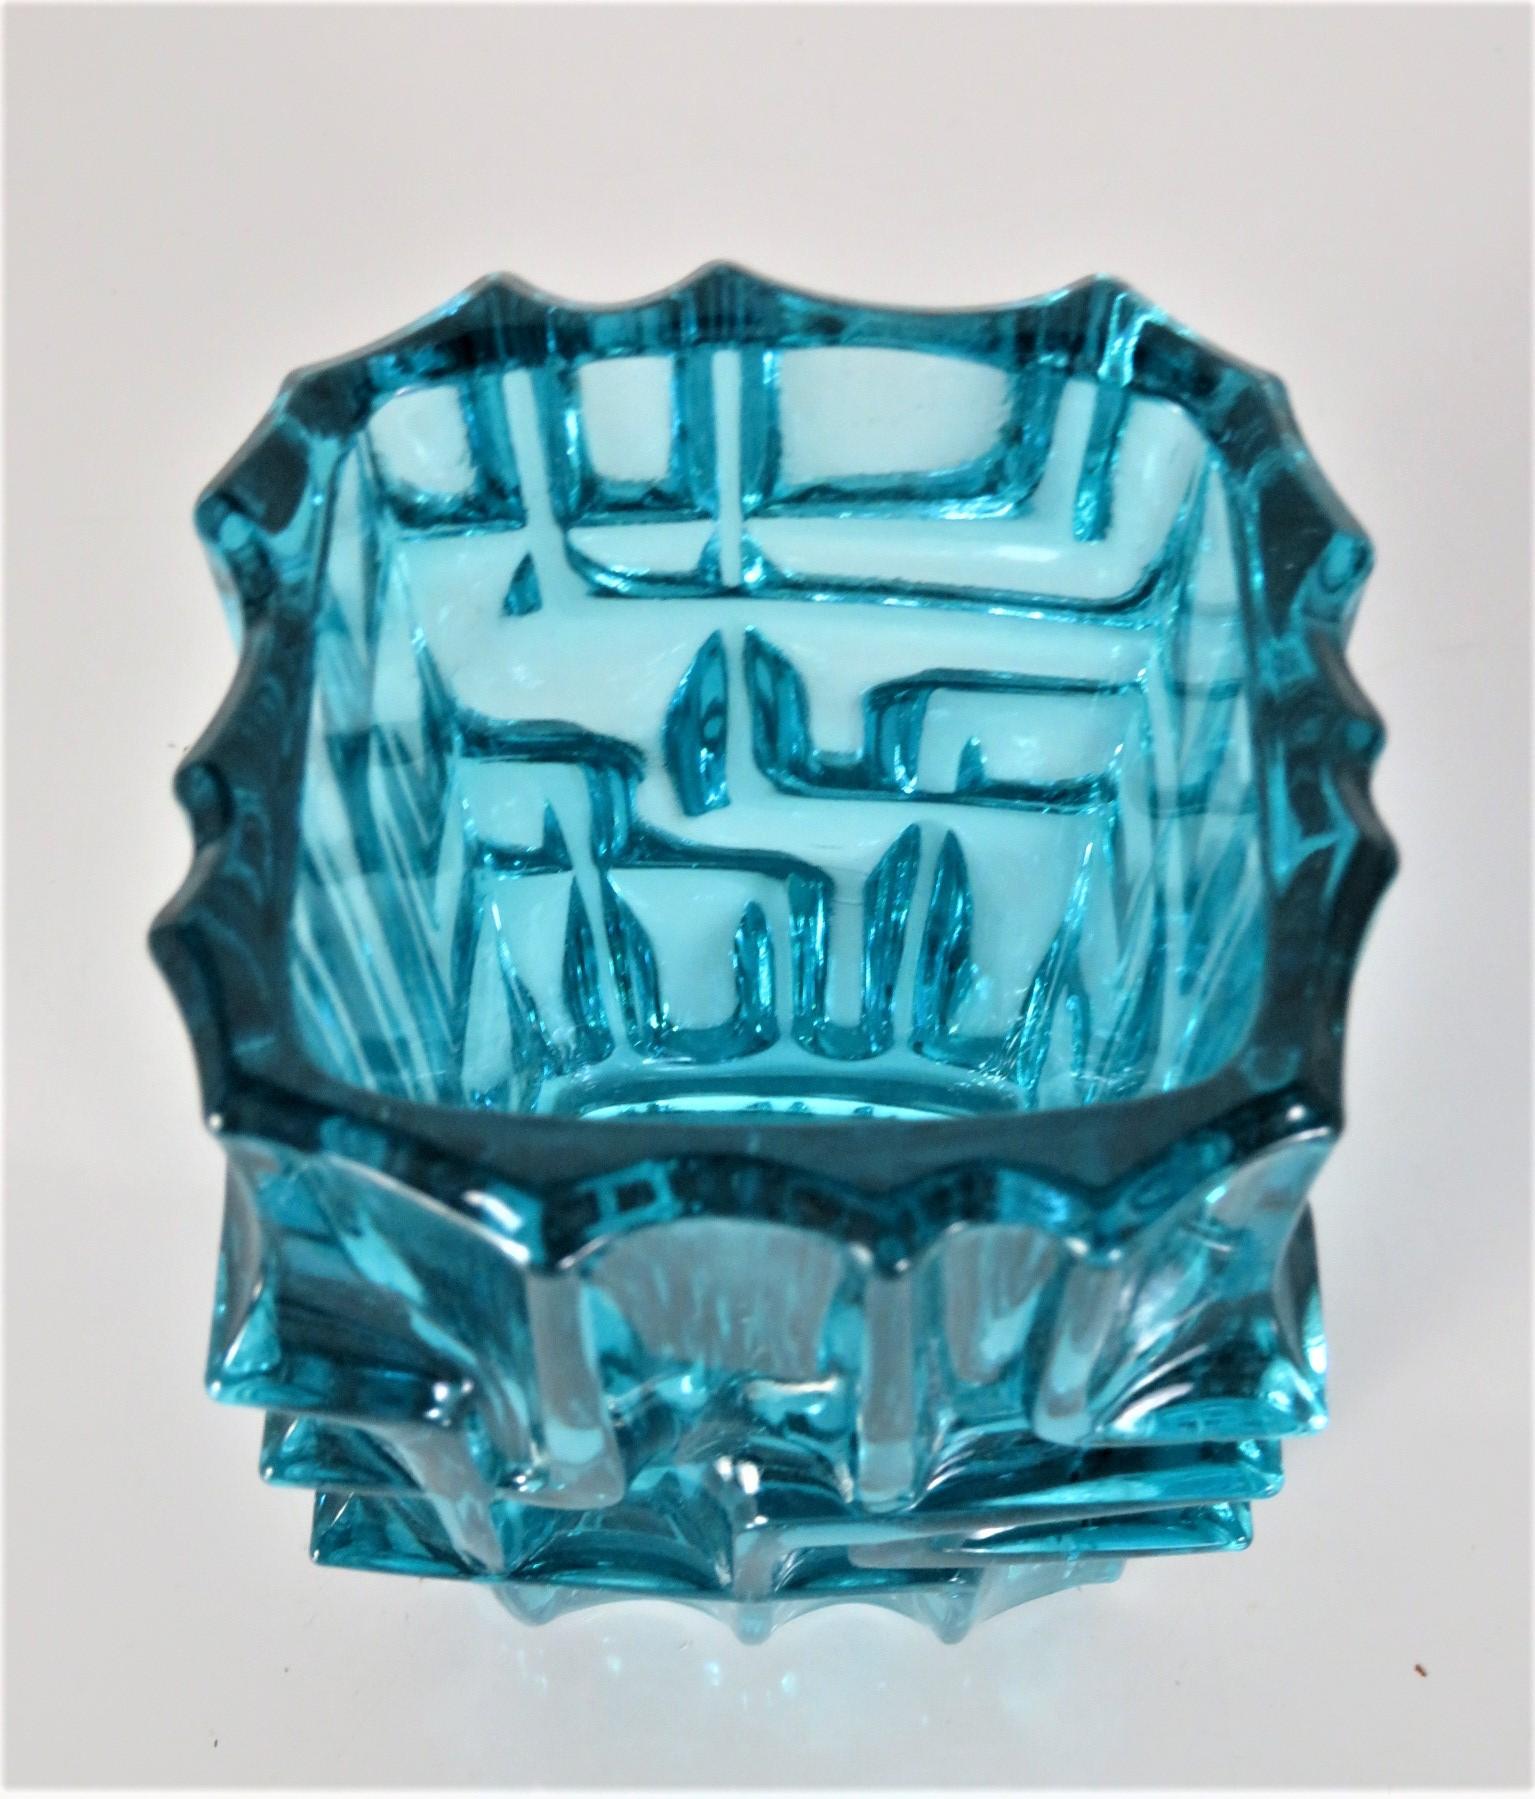 Pressed Blue Vladislav Urban Glass Vase Sklo Union Rosice Glassworks Czechoslovakia 1968